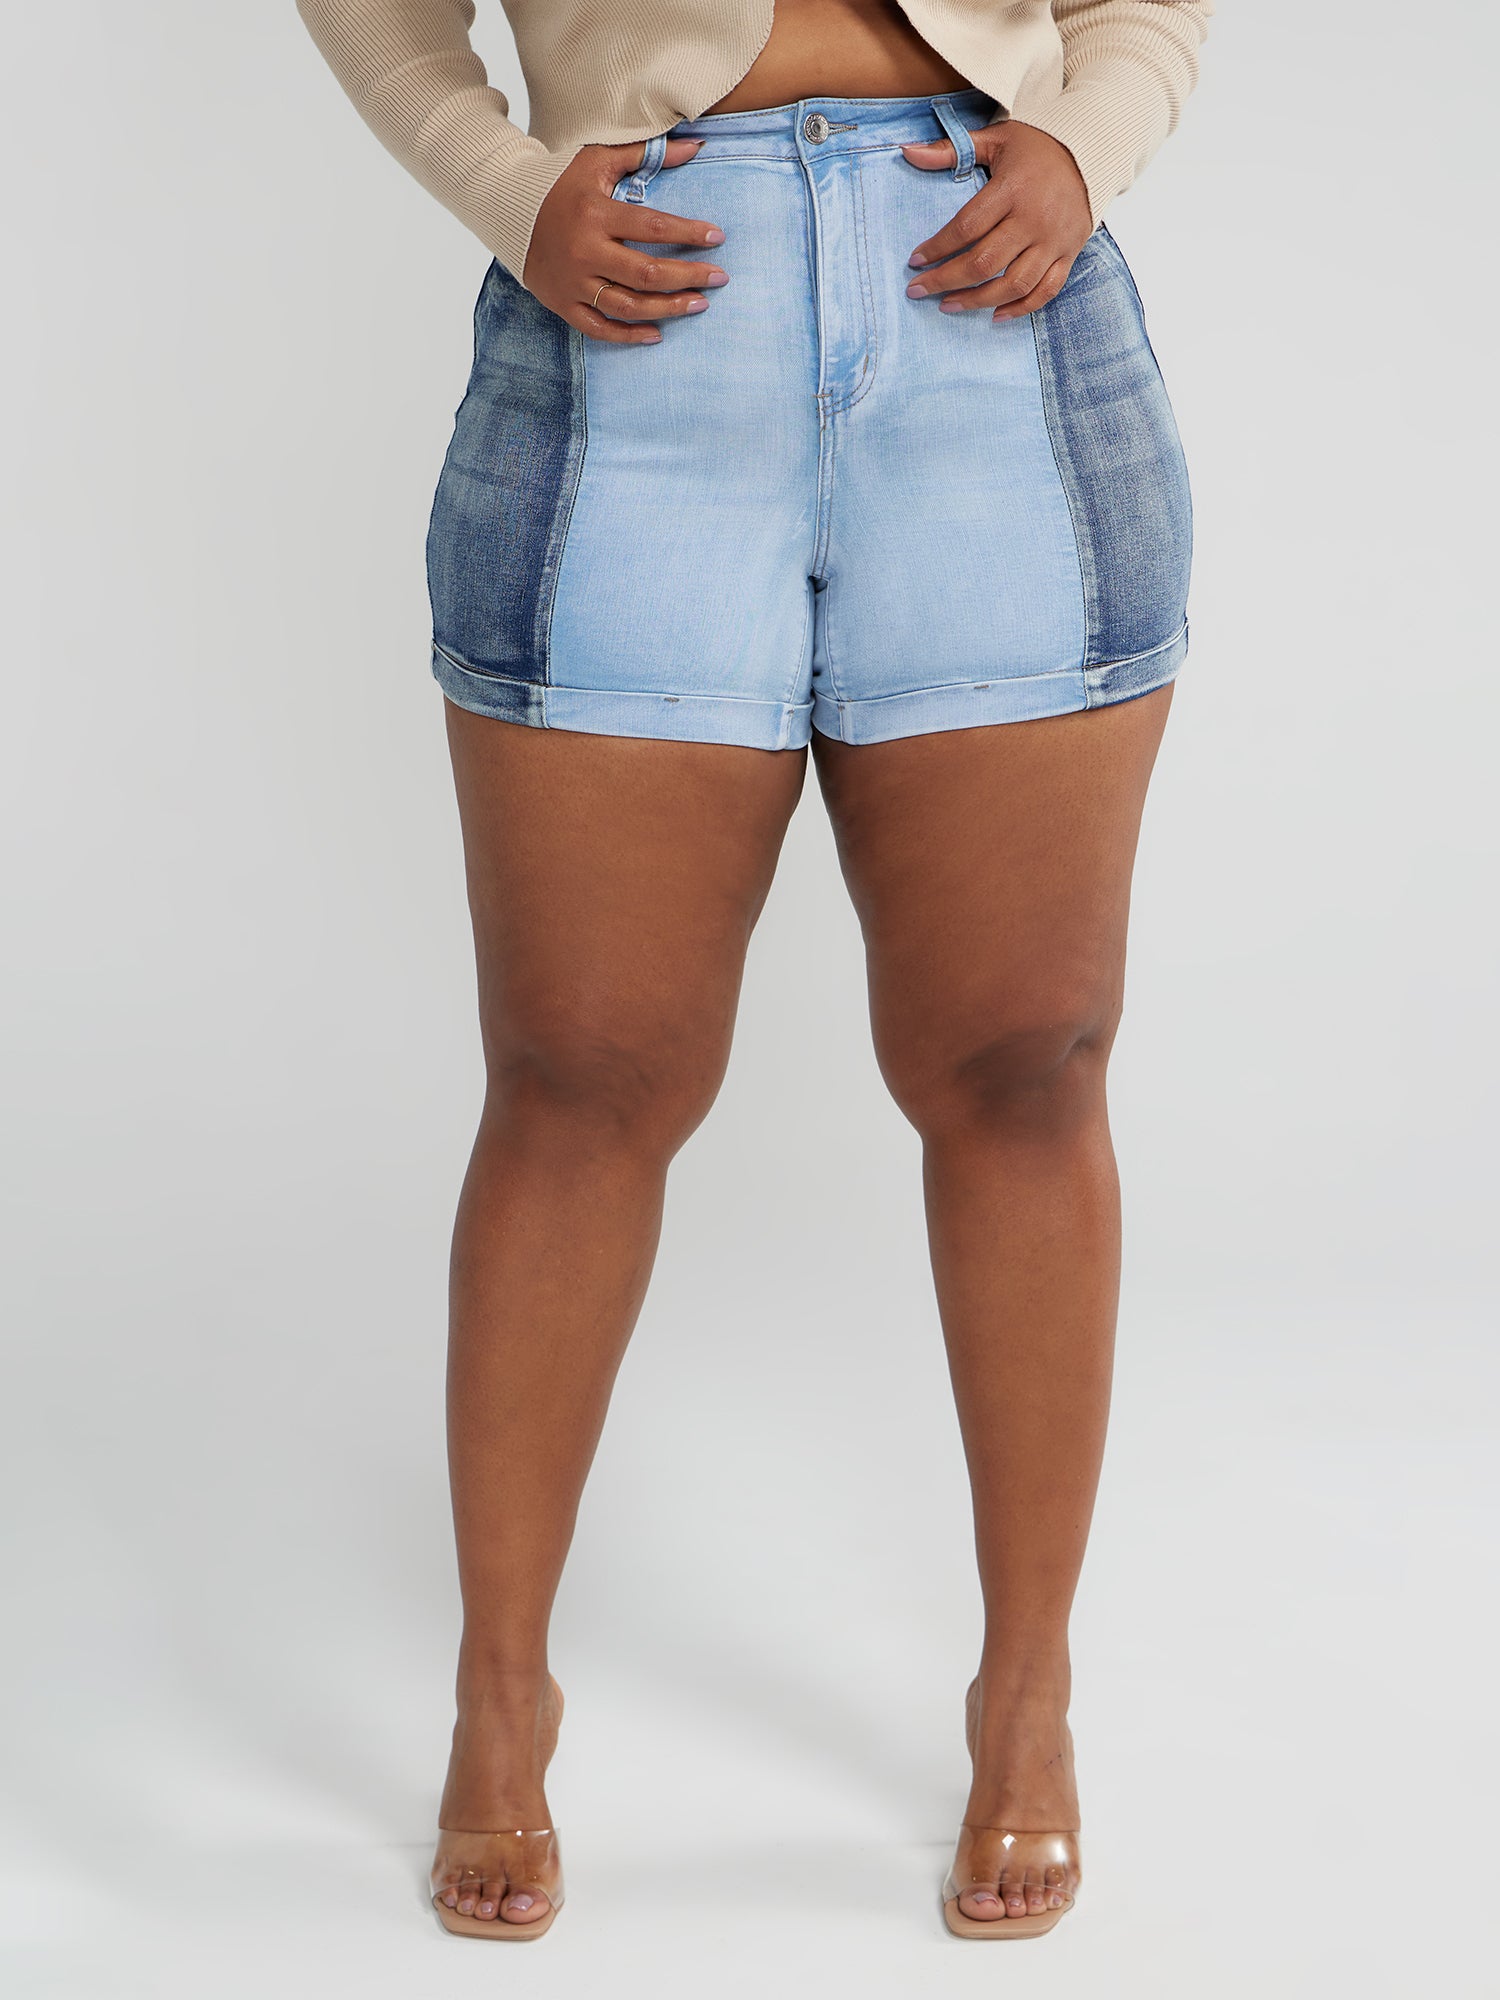 Buy ALLEGRACE Plus Size Shorts Women Denim High Waisted